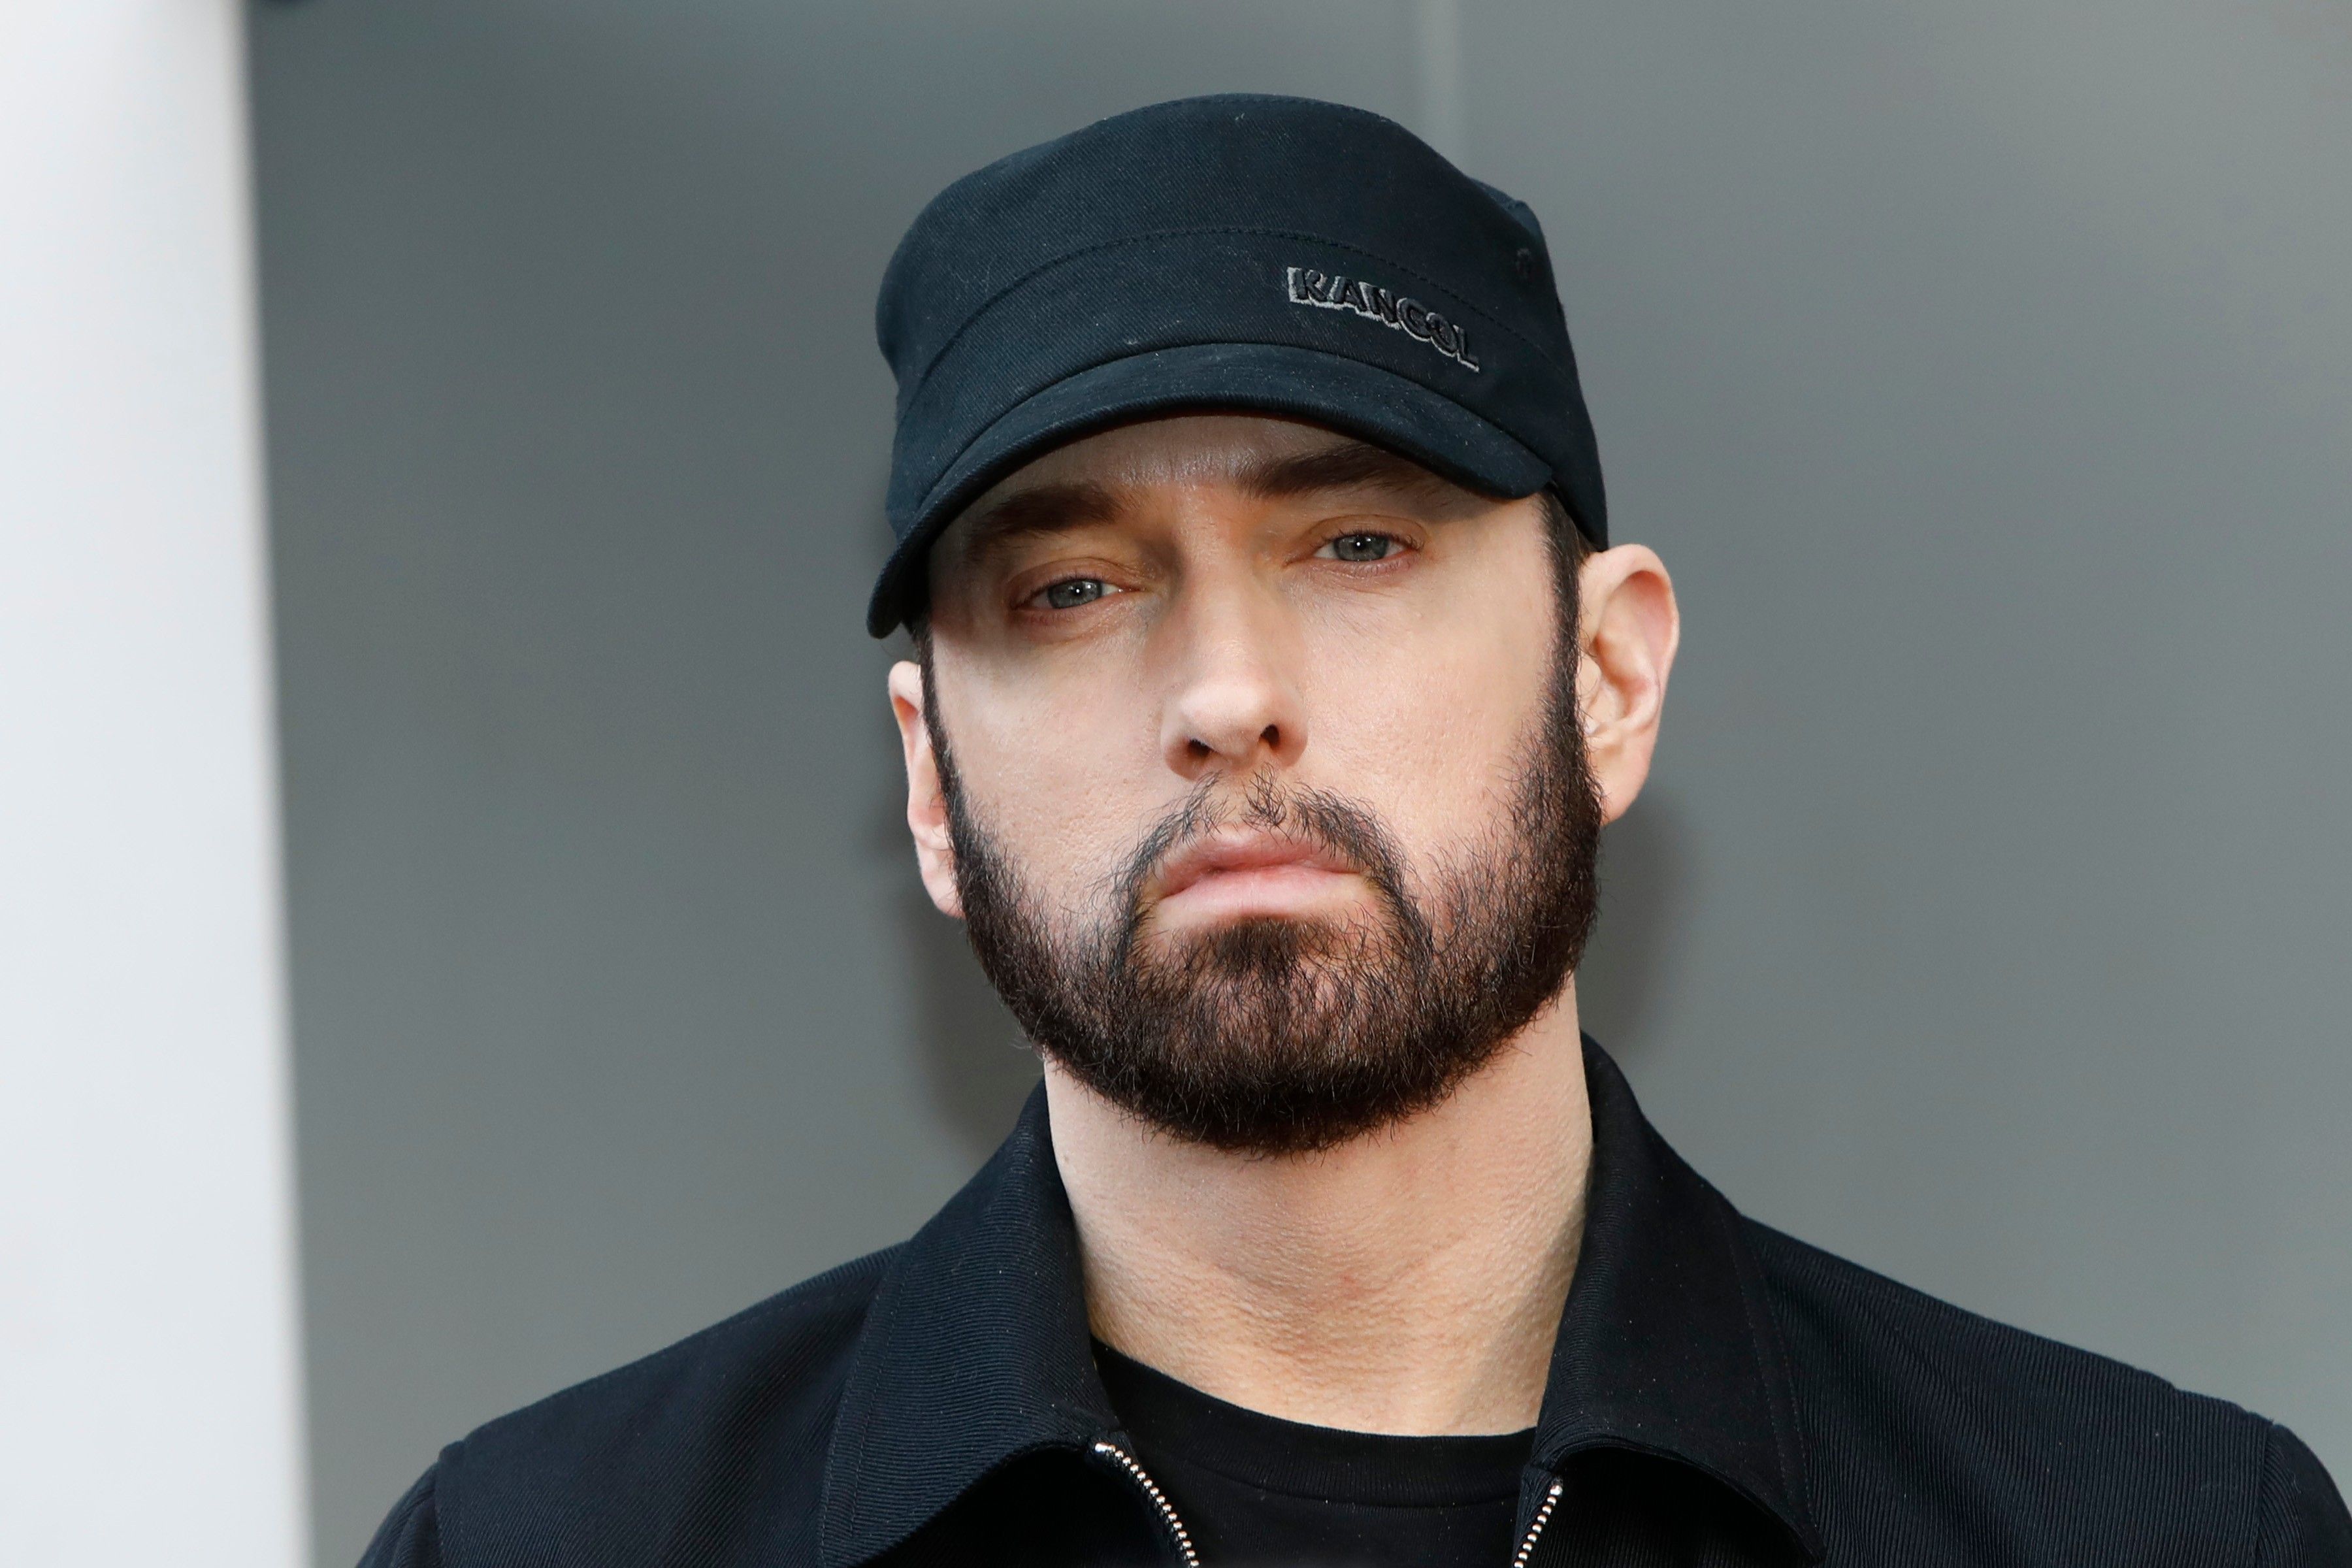 ÚLTIMA HORA: Asesinan a la leyenda del rap, Eminem.